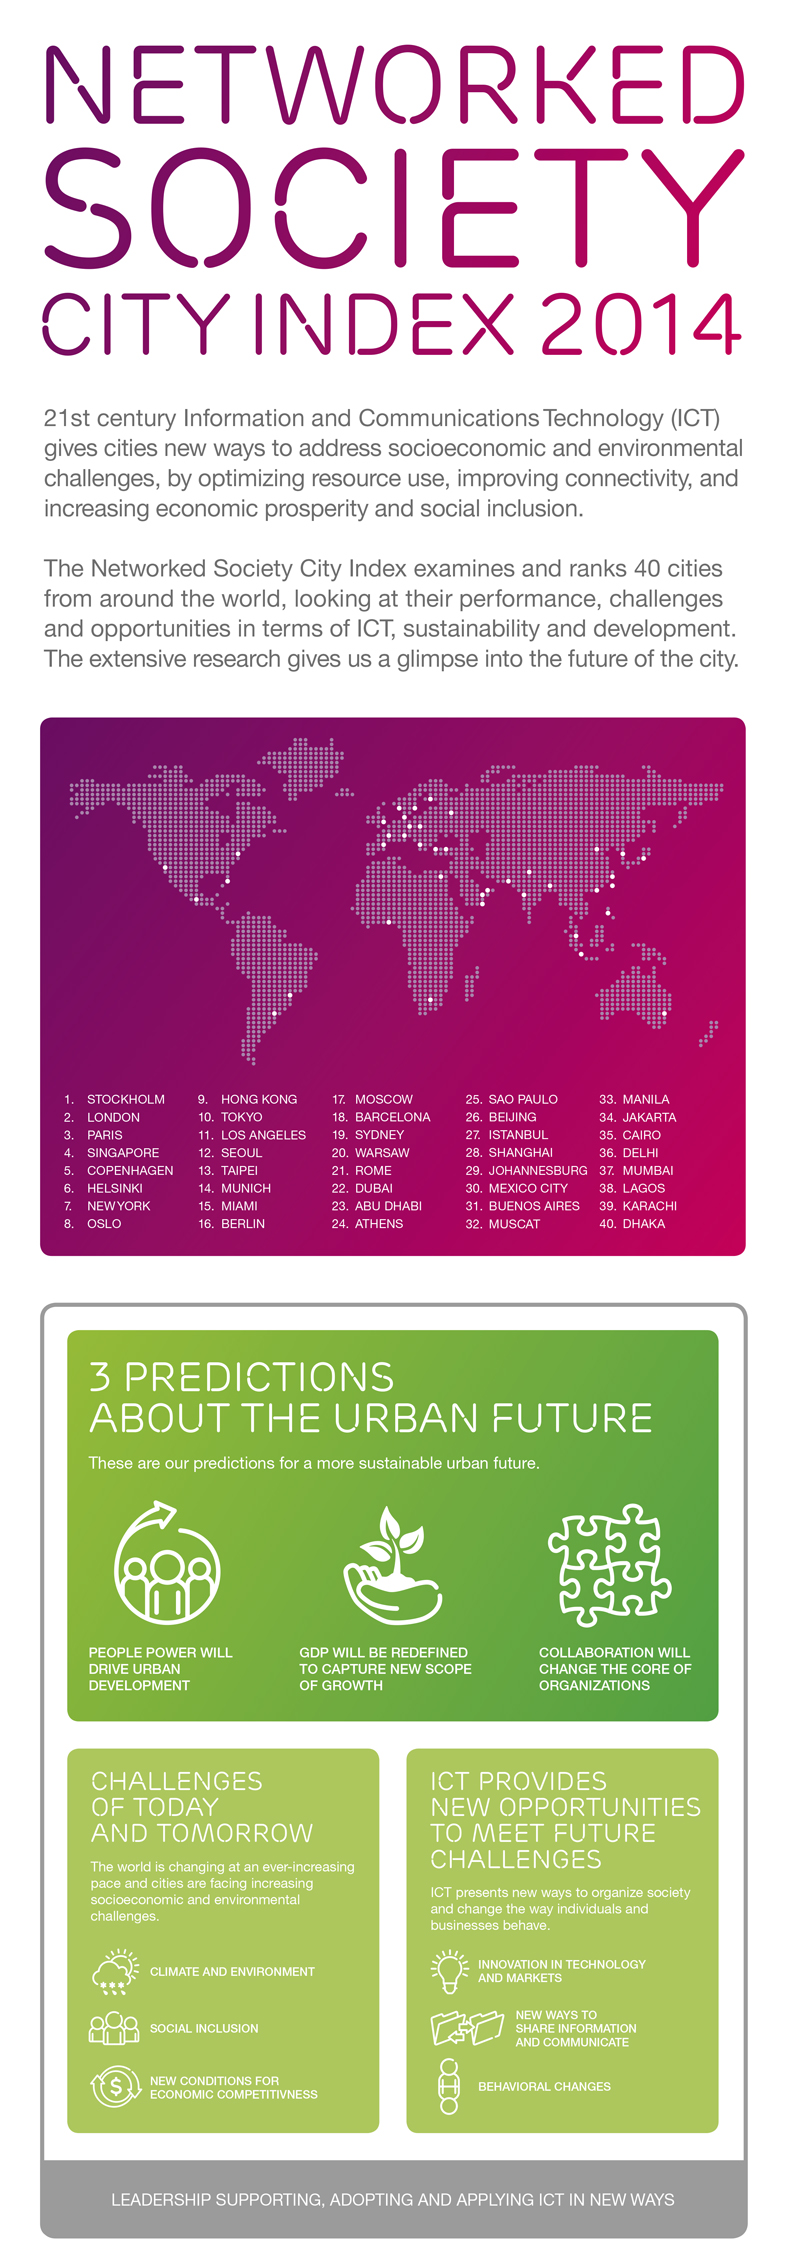 Ericsson Networked Society City Index 2014 infographic summary